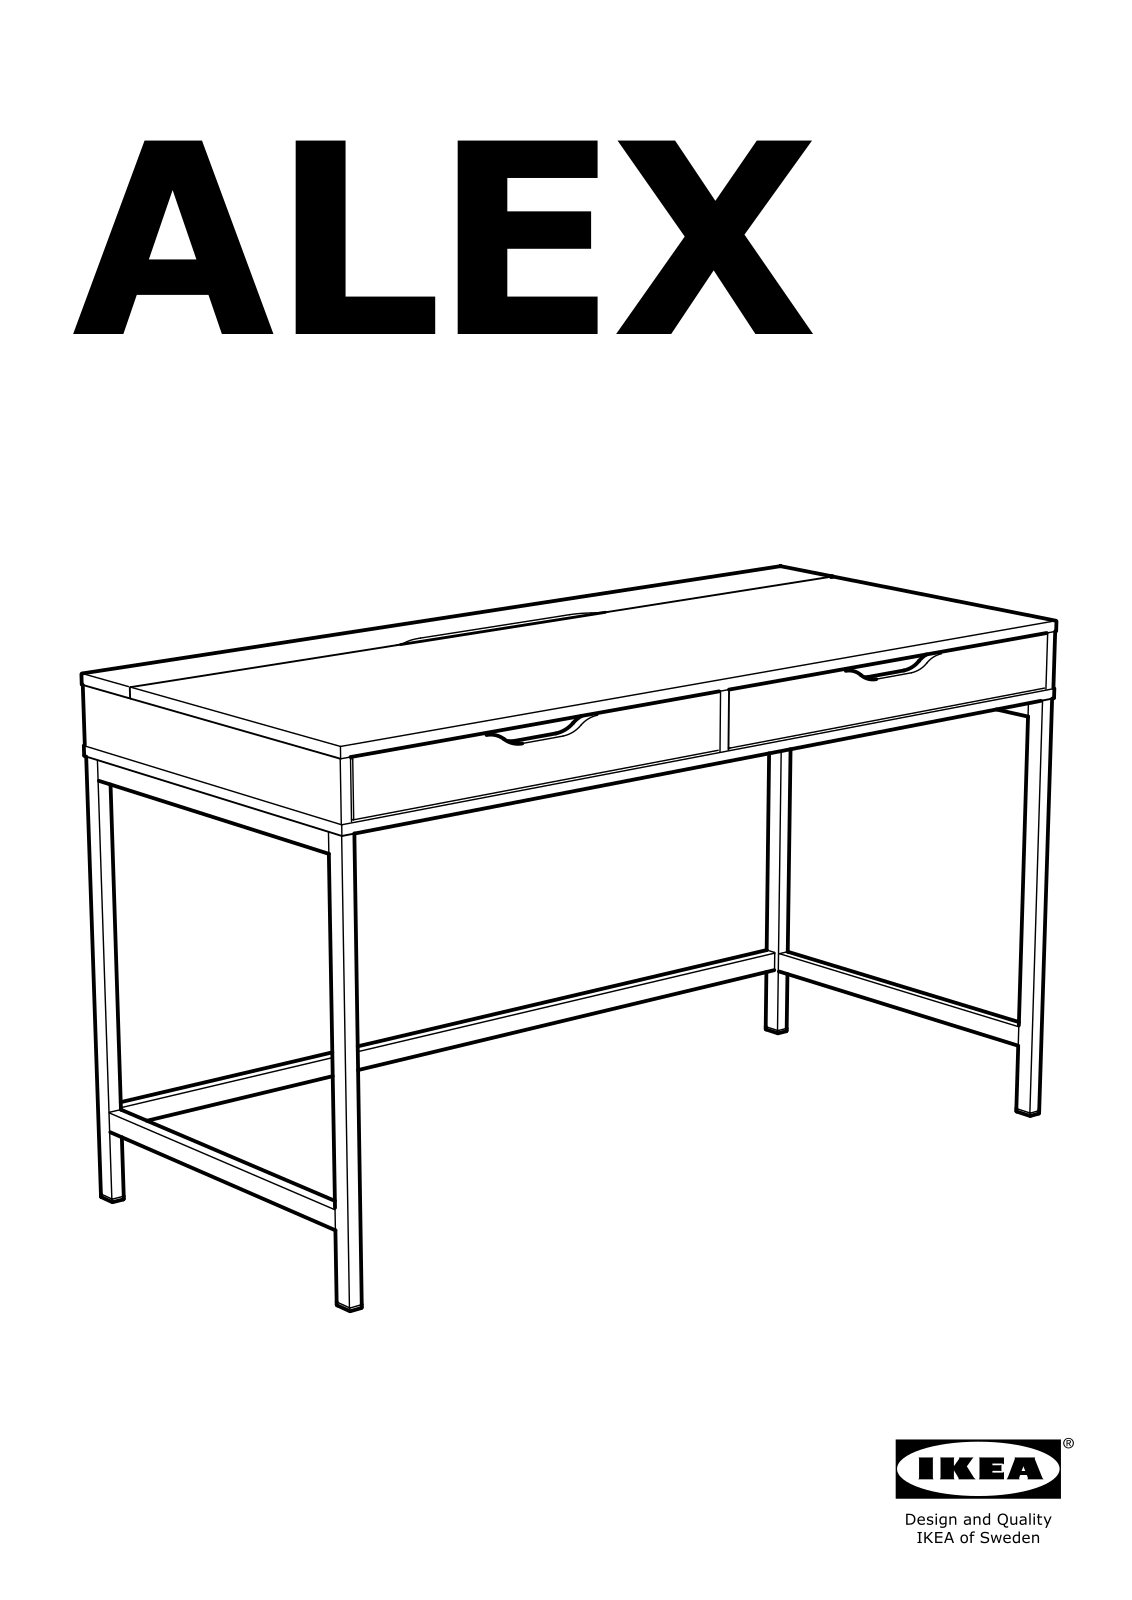 IKEA ALEX User Manual